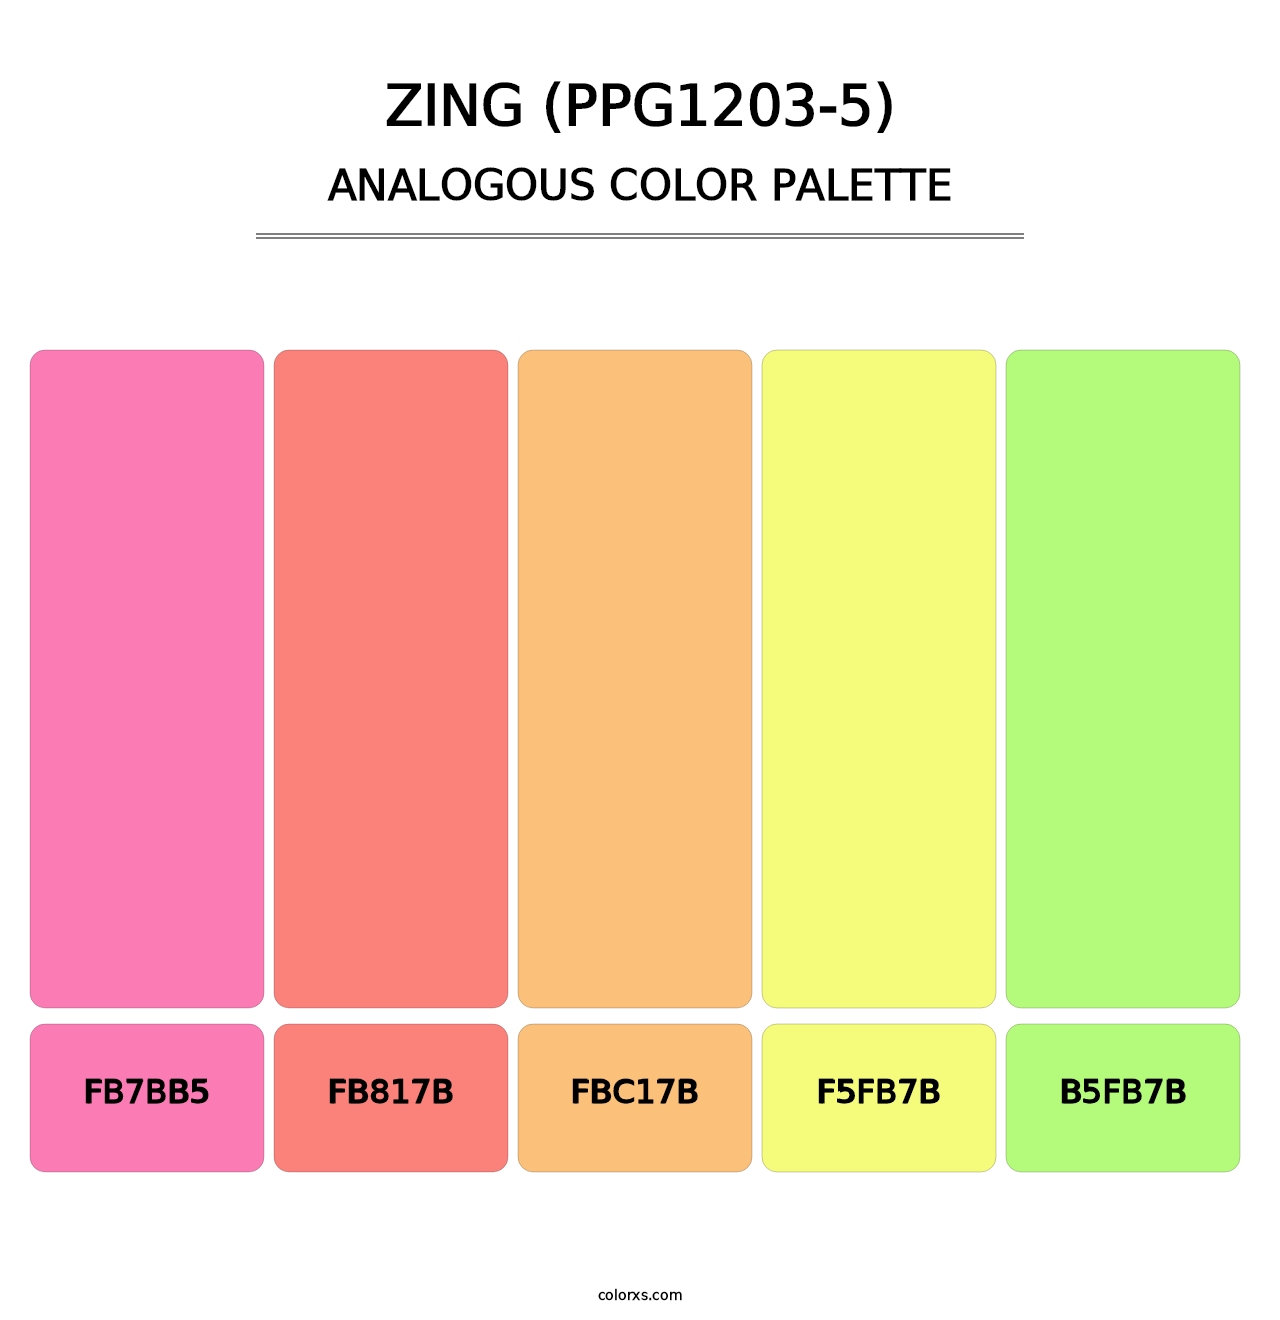 Zing (PPG1203-5) - Analogous Color Palette